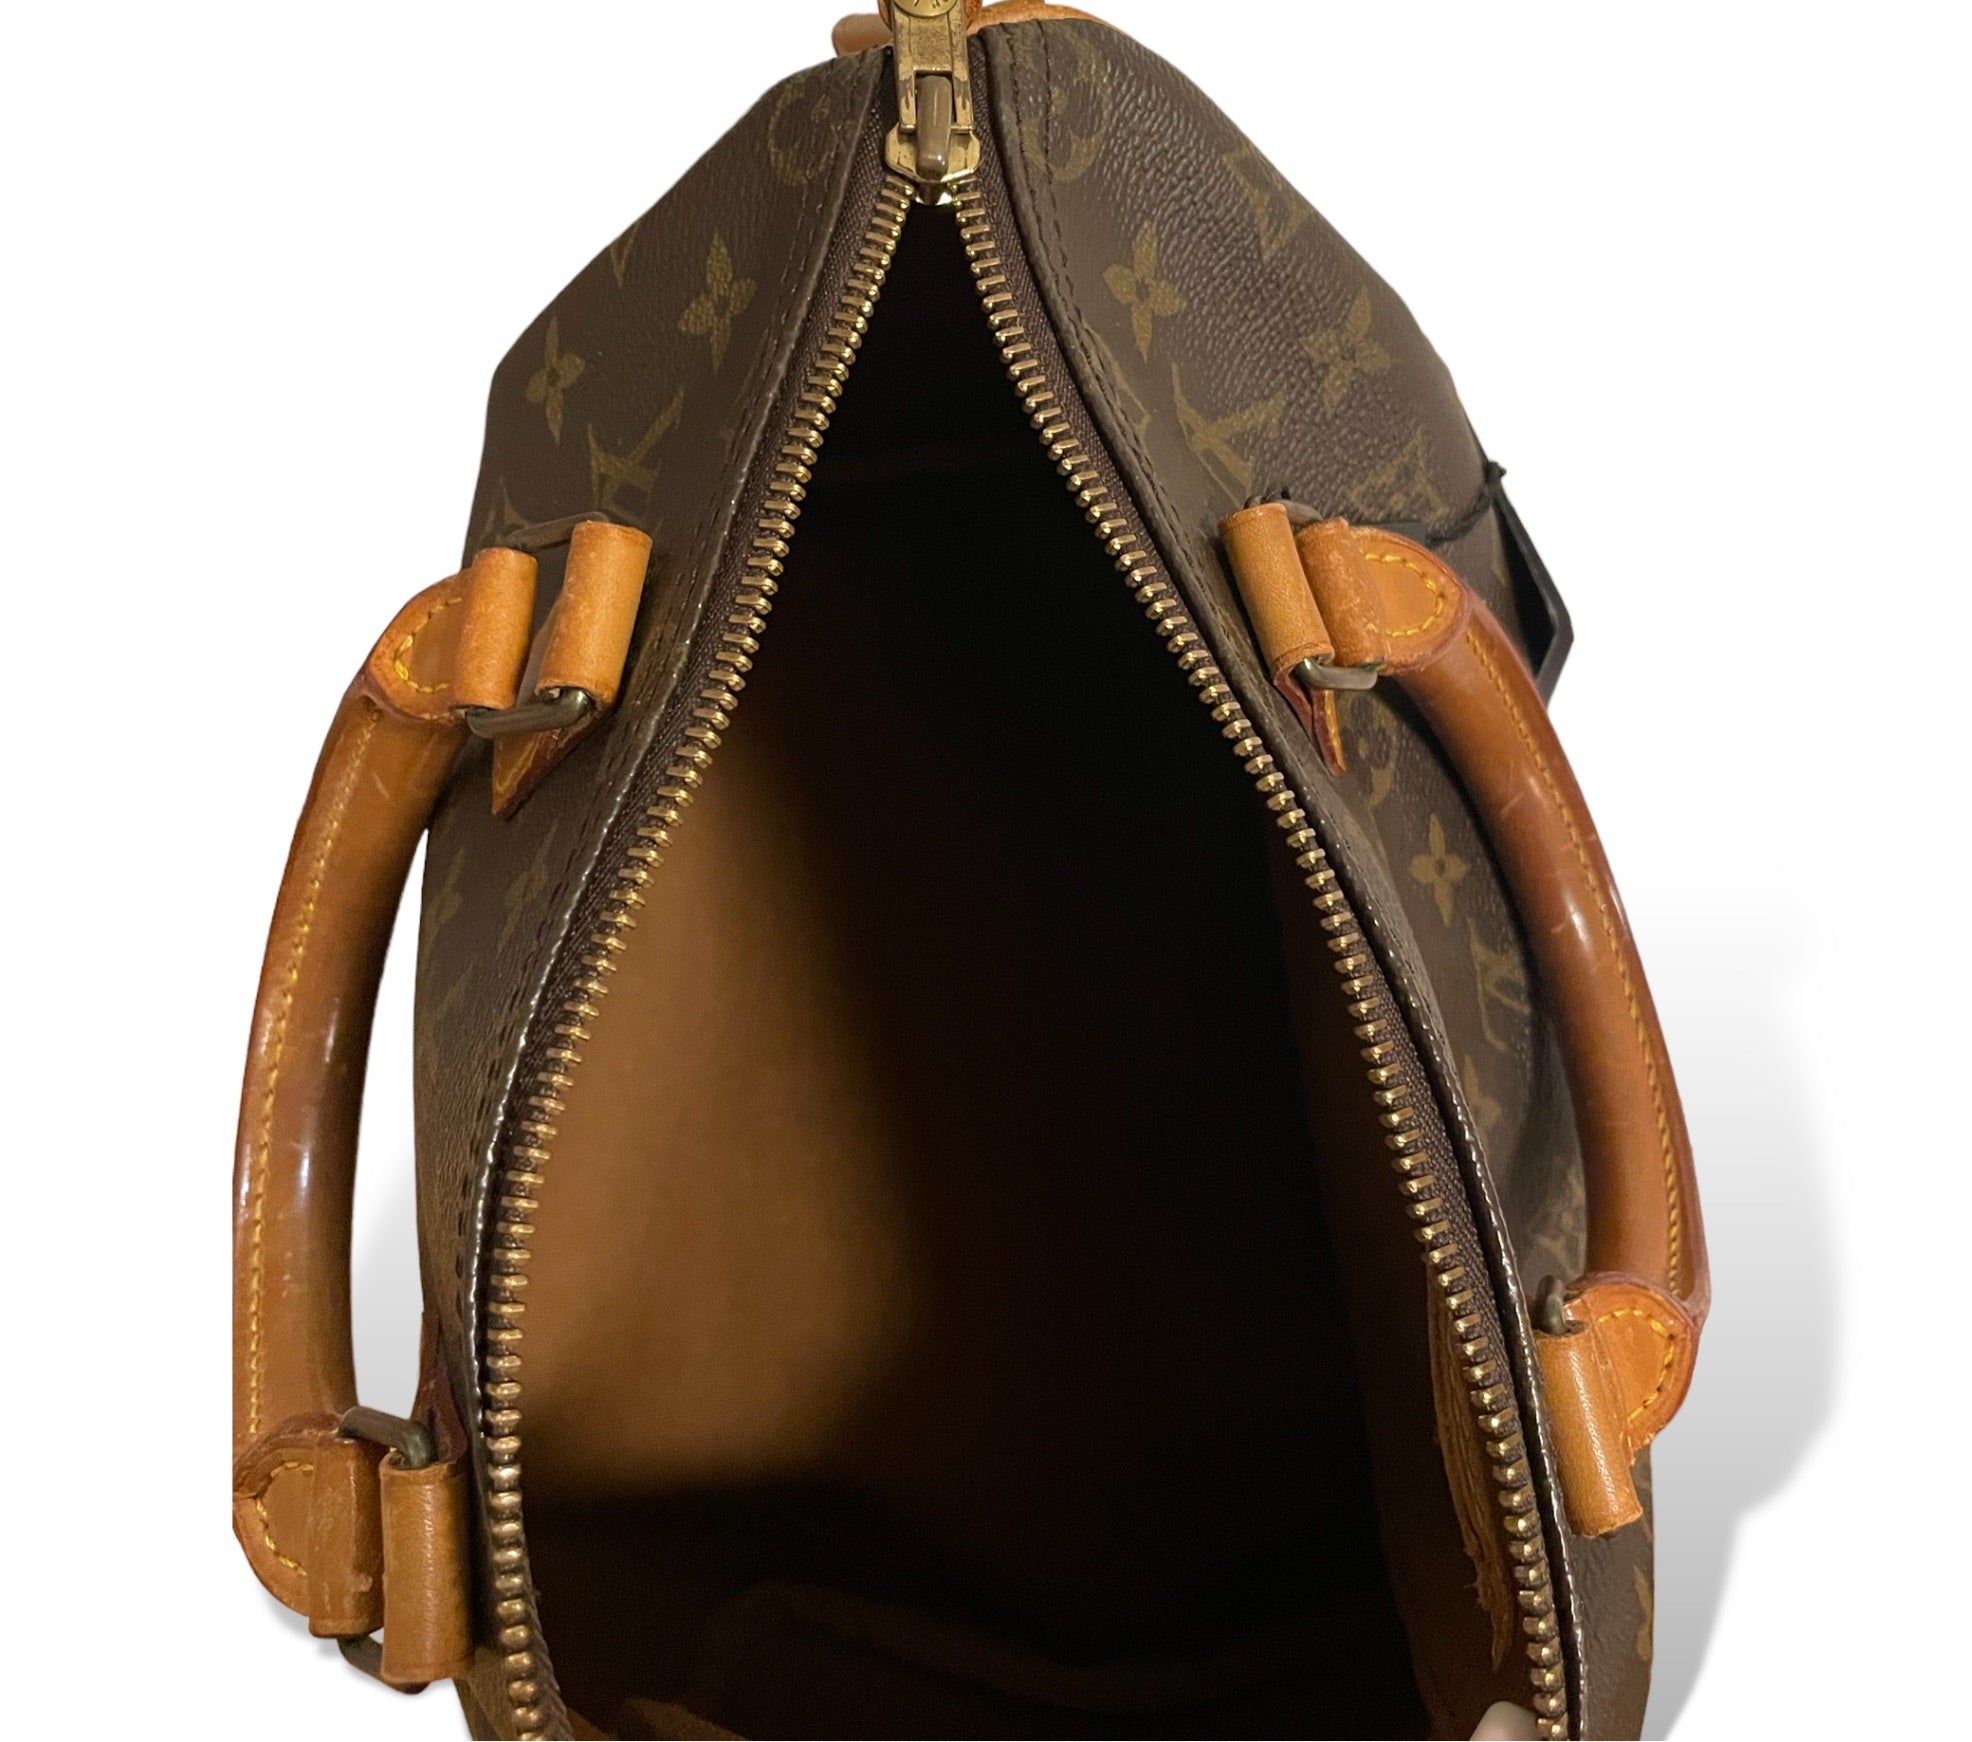 Louis Vuitton Vintage Speedy 25 handbag in iconic Monogram coated canvas & Vachetta leather trim